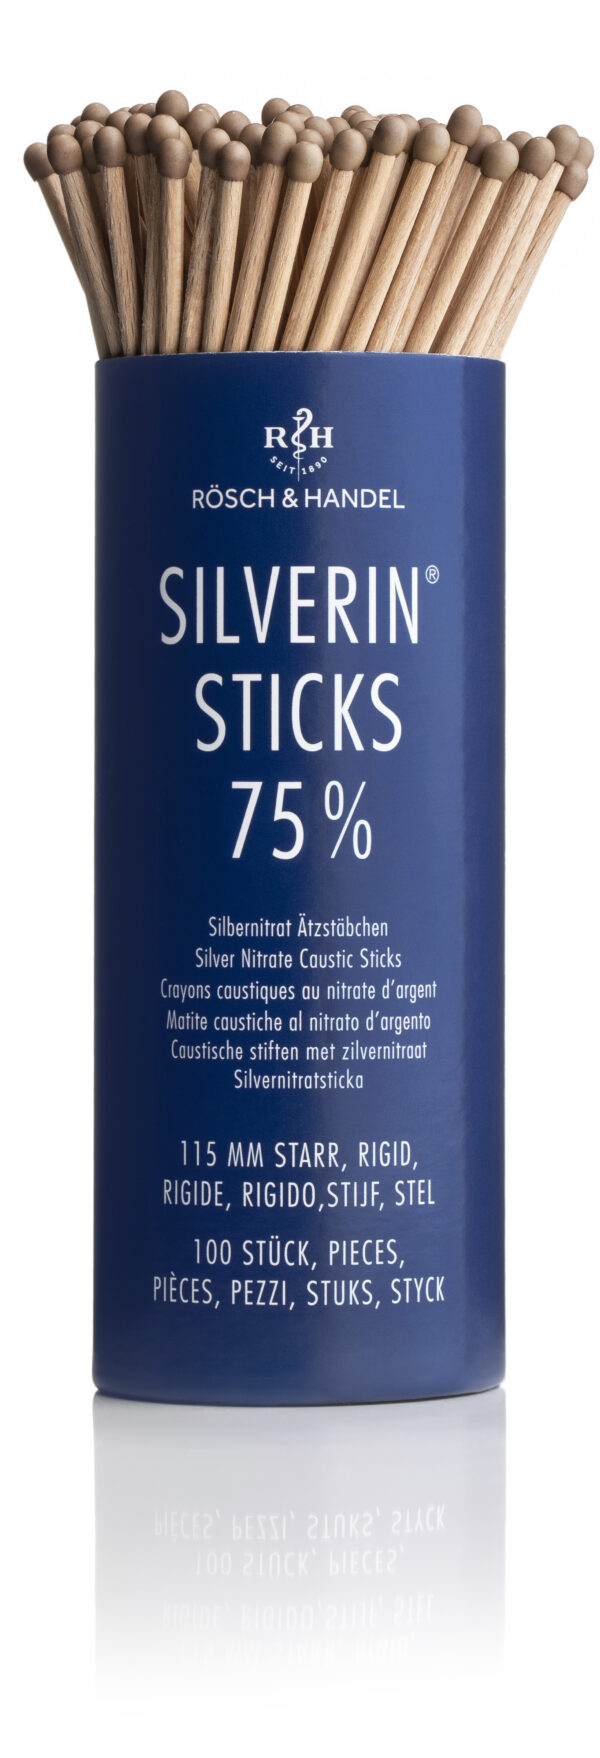 Silverin Sticks 75� 115mm starr 100 Stk. Stäbchen web BW 191029 600x1758 - Patyczki SILVERIN® 75% sztywne 100 sztuk